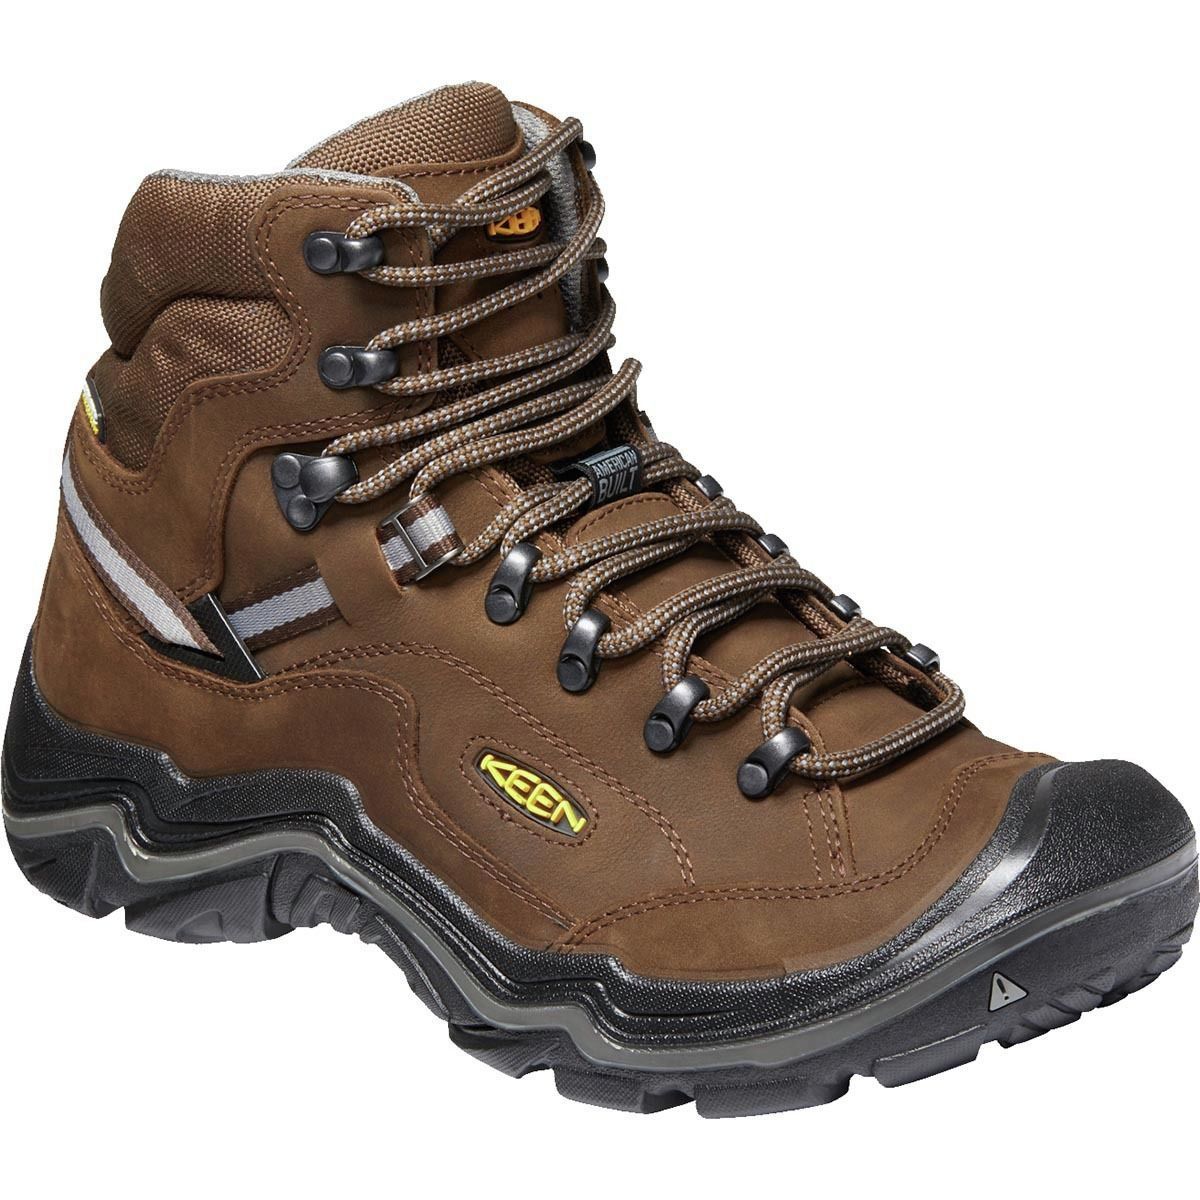 KEEN Durand II Mid Waterproof Hiking Boot - Wide - Men's | Backcountry.com